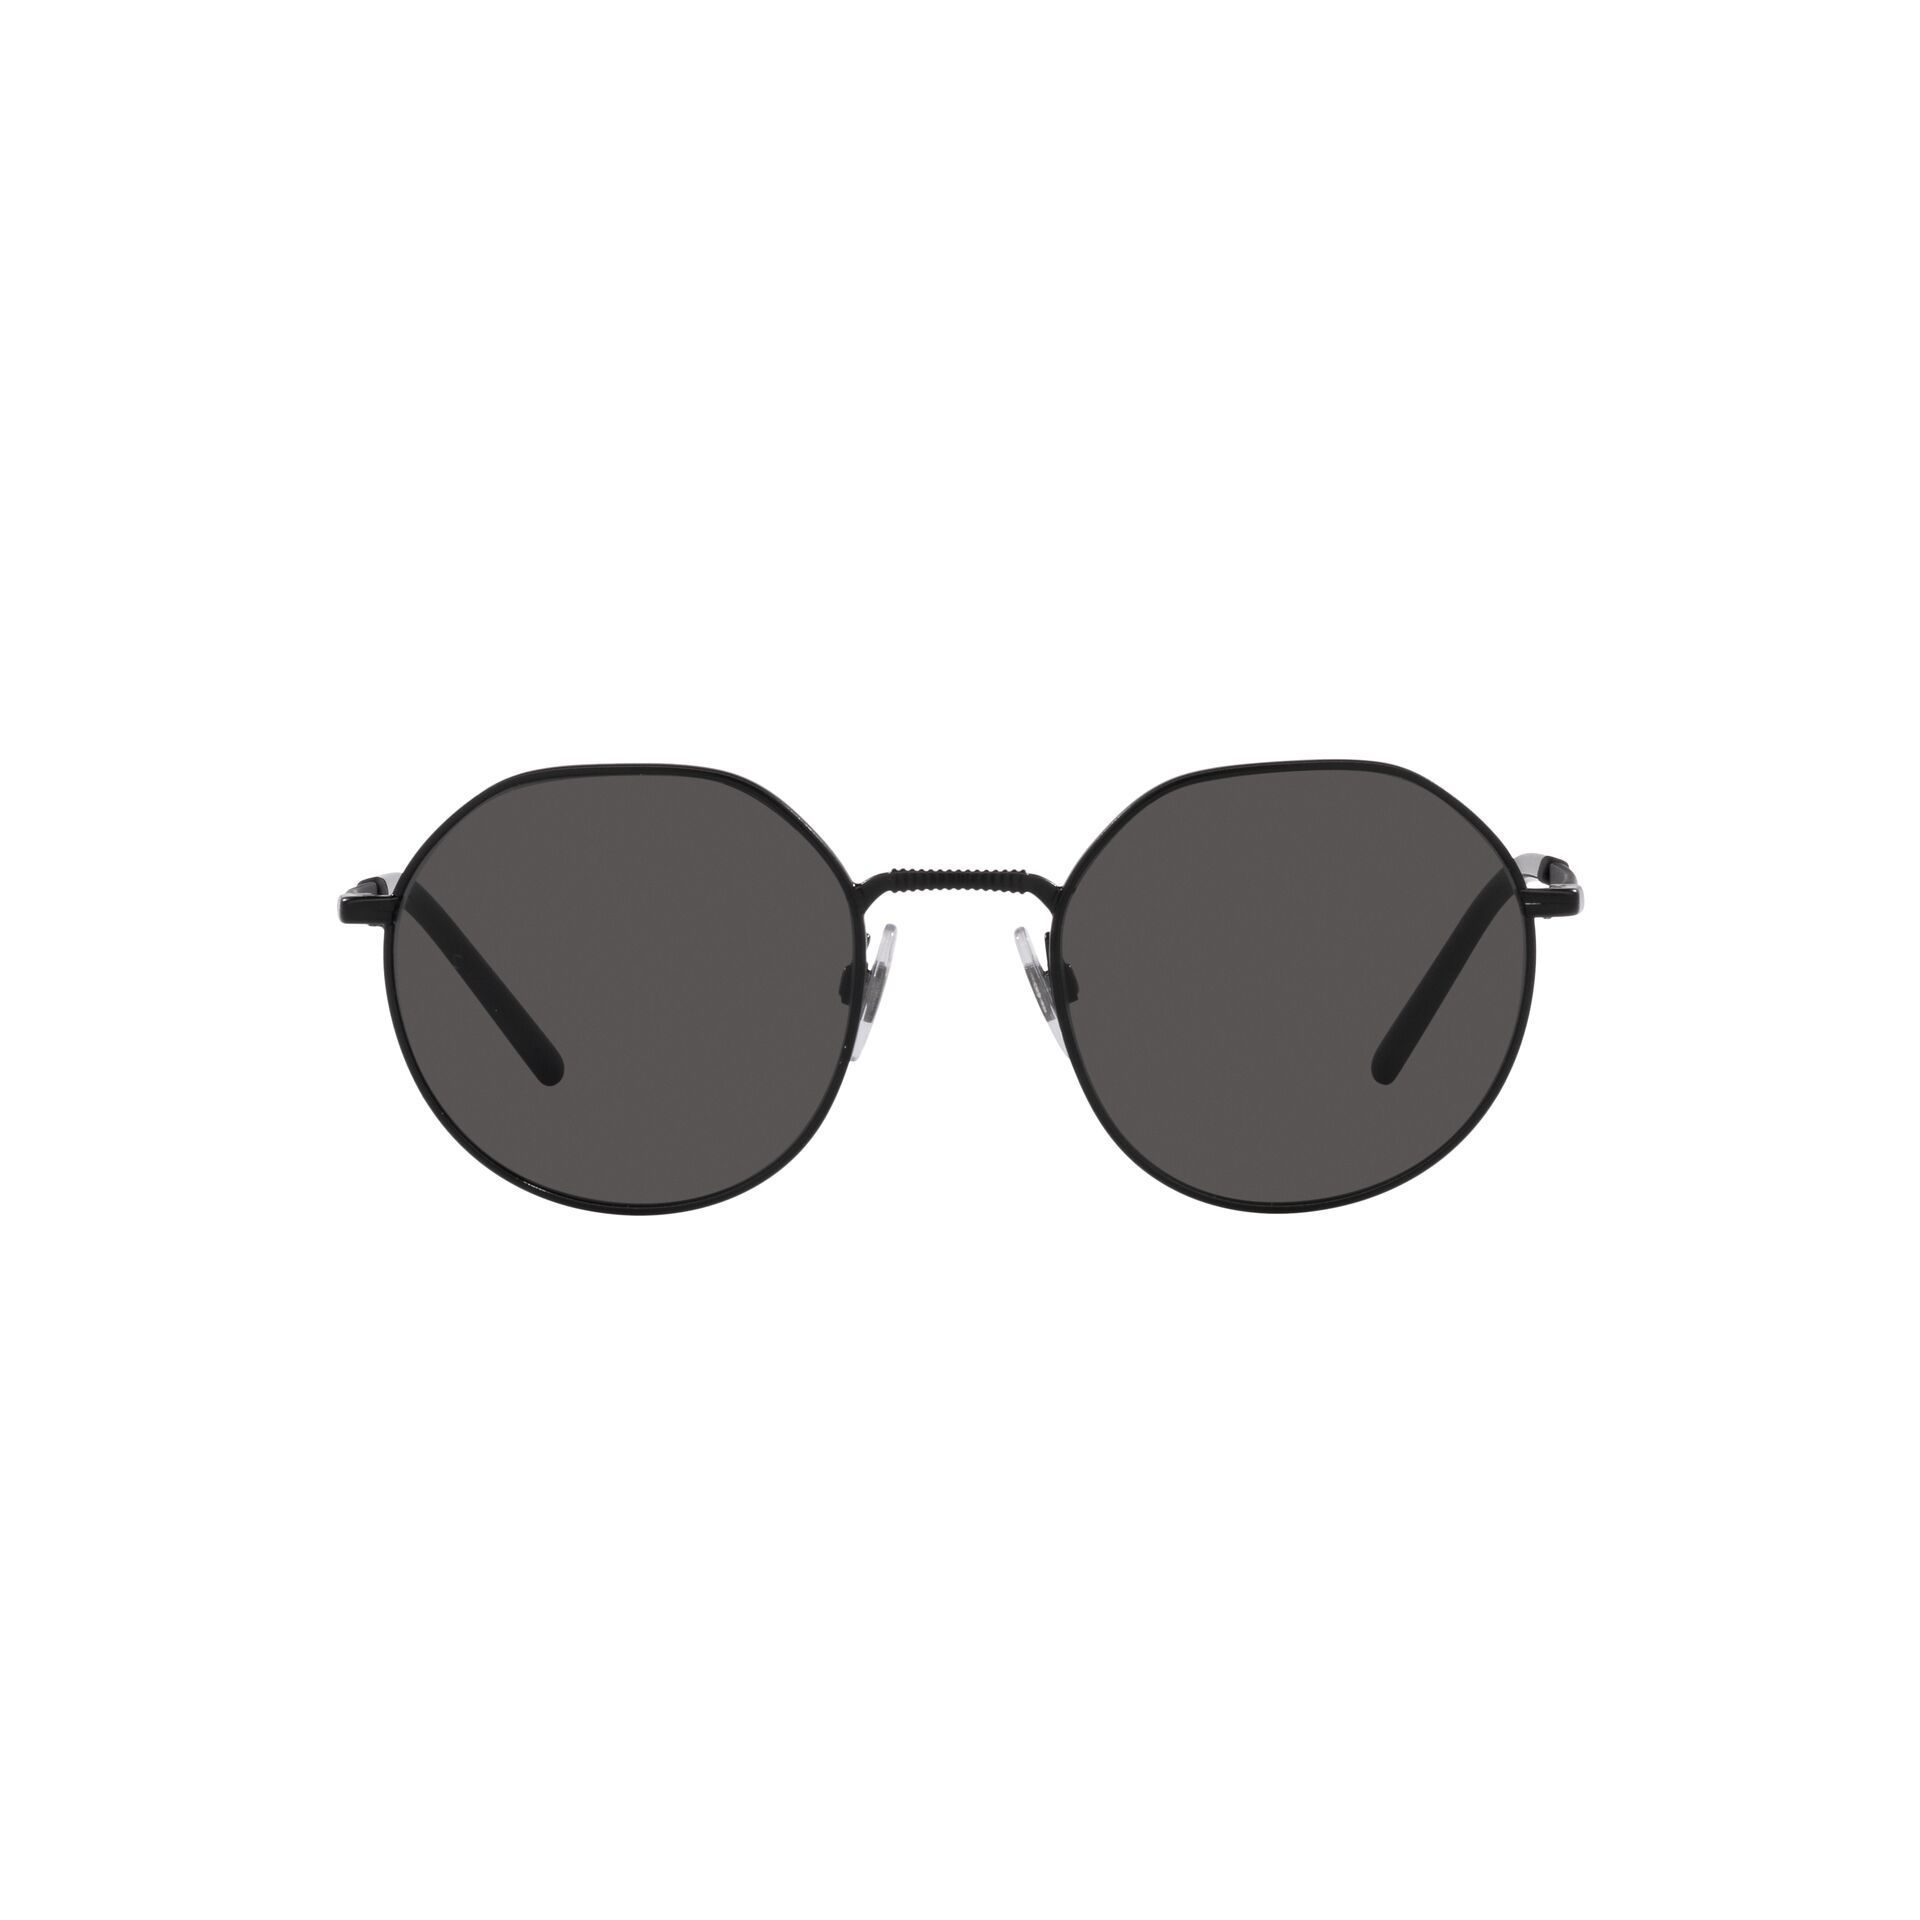 DG2286 Round Sunglasses 110687 - size 52